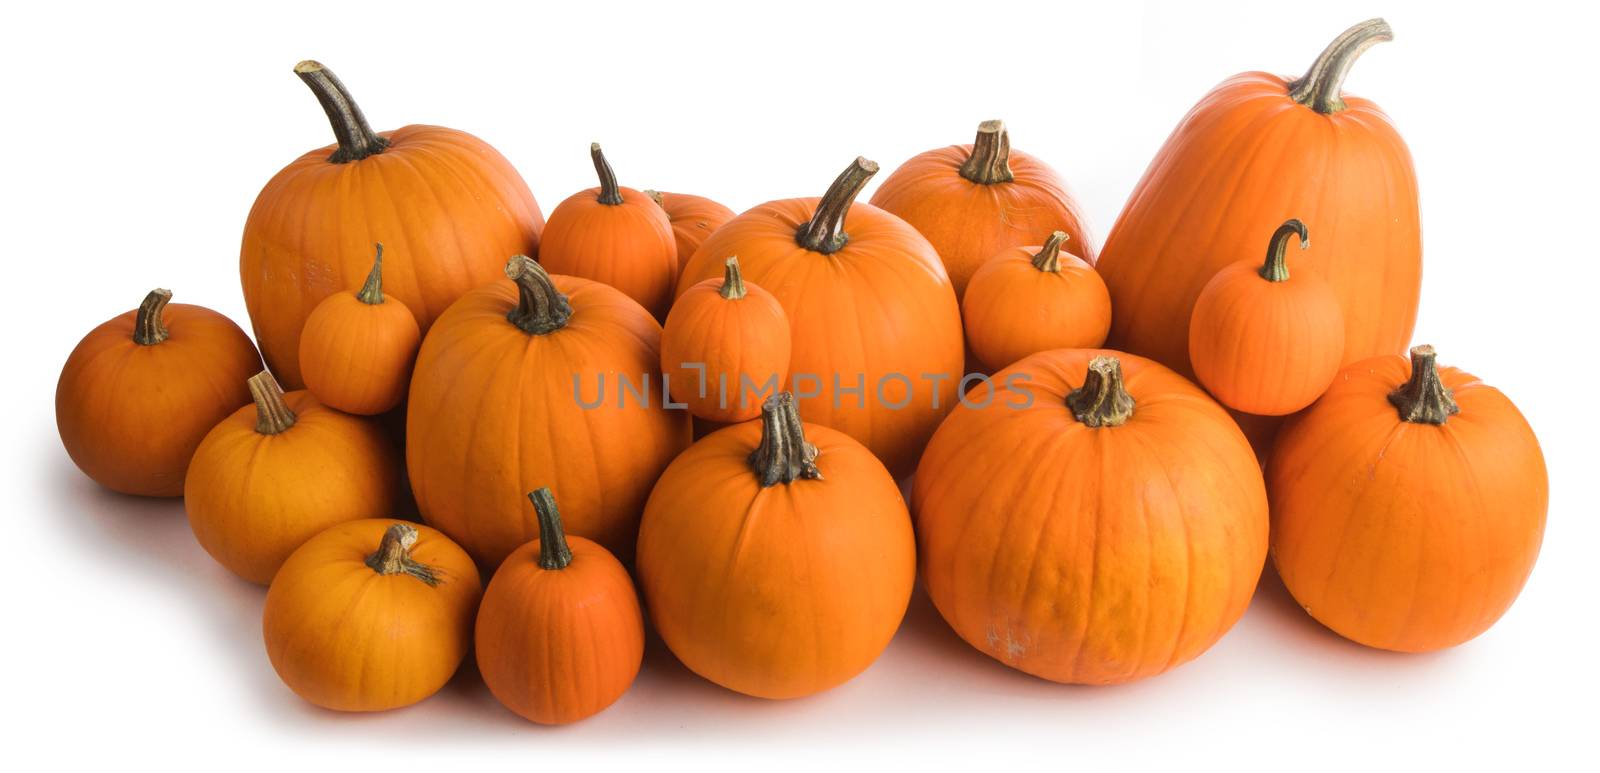 Many orange pumpkins by Yellowj